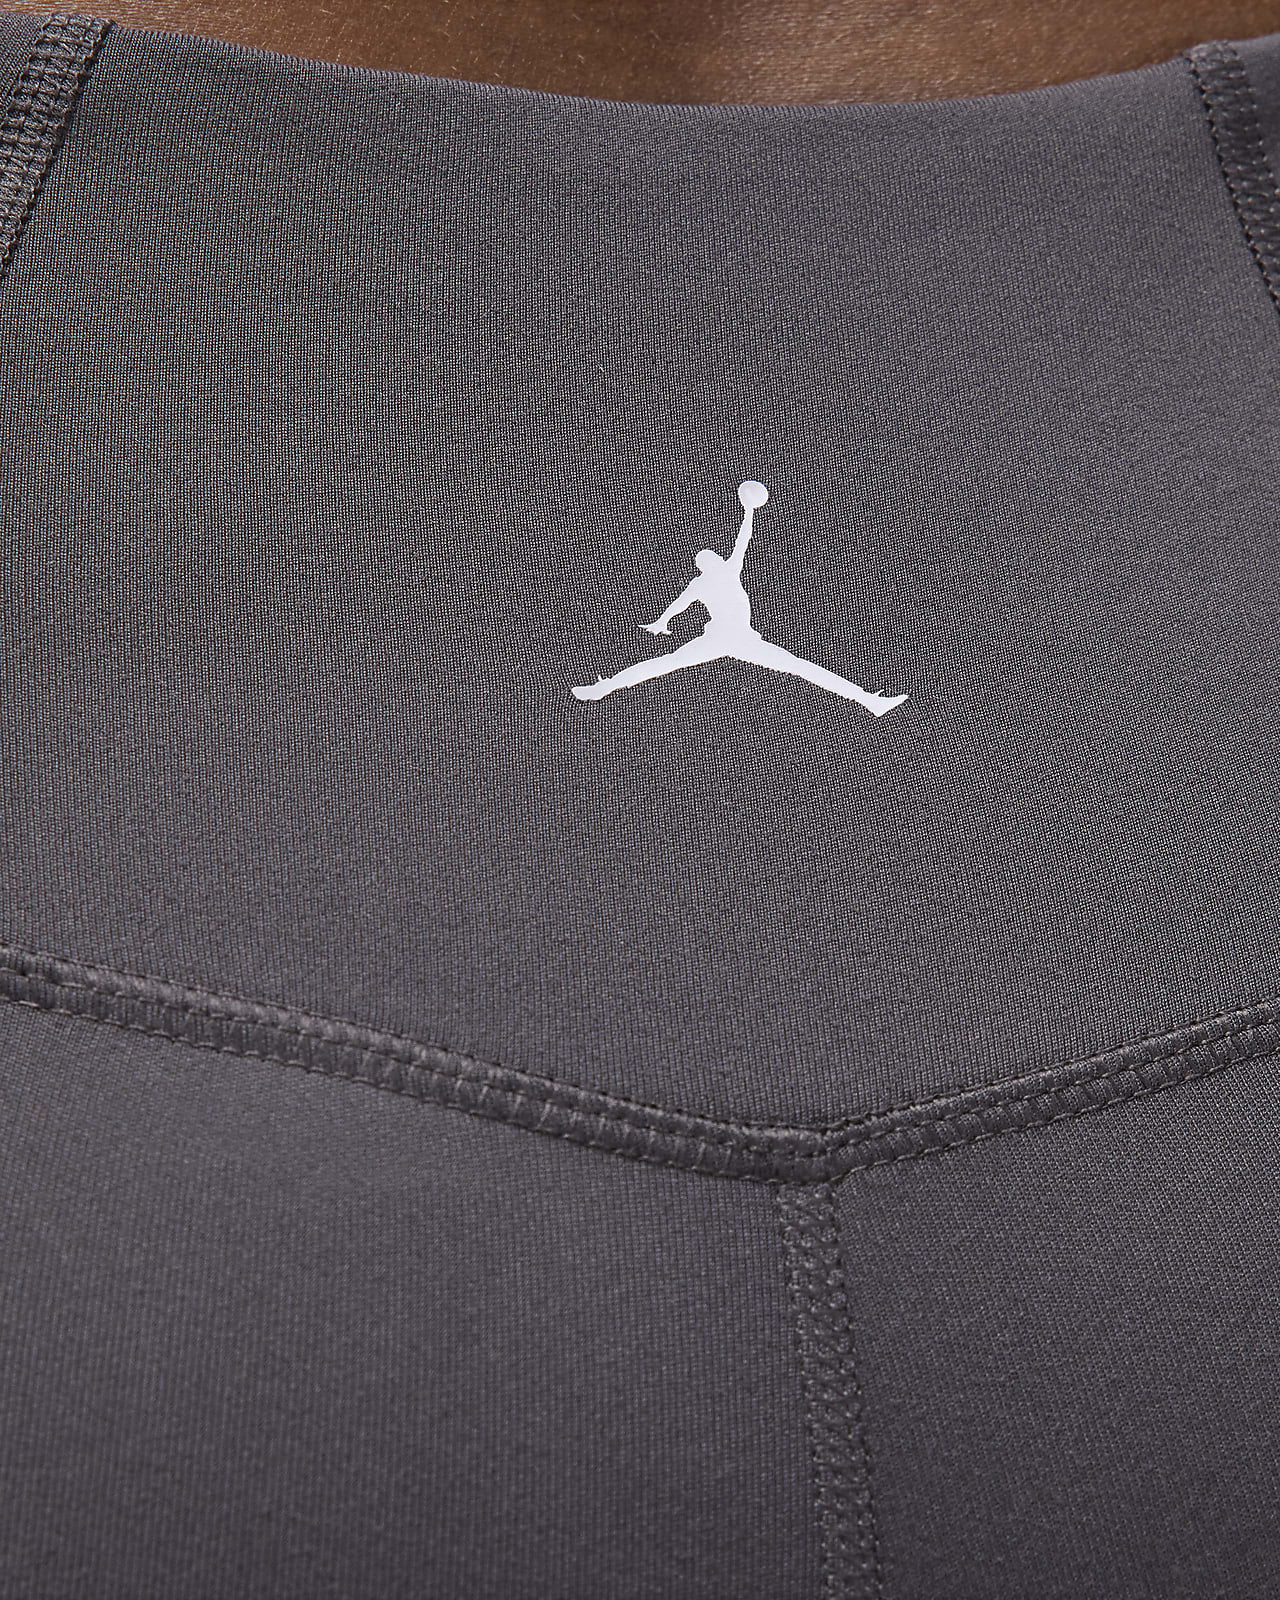 Nike Jordan Dominate Men's Tights